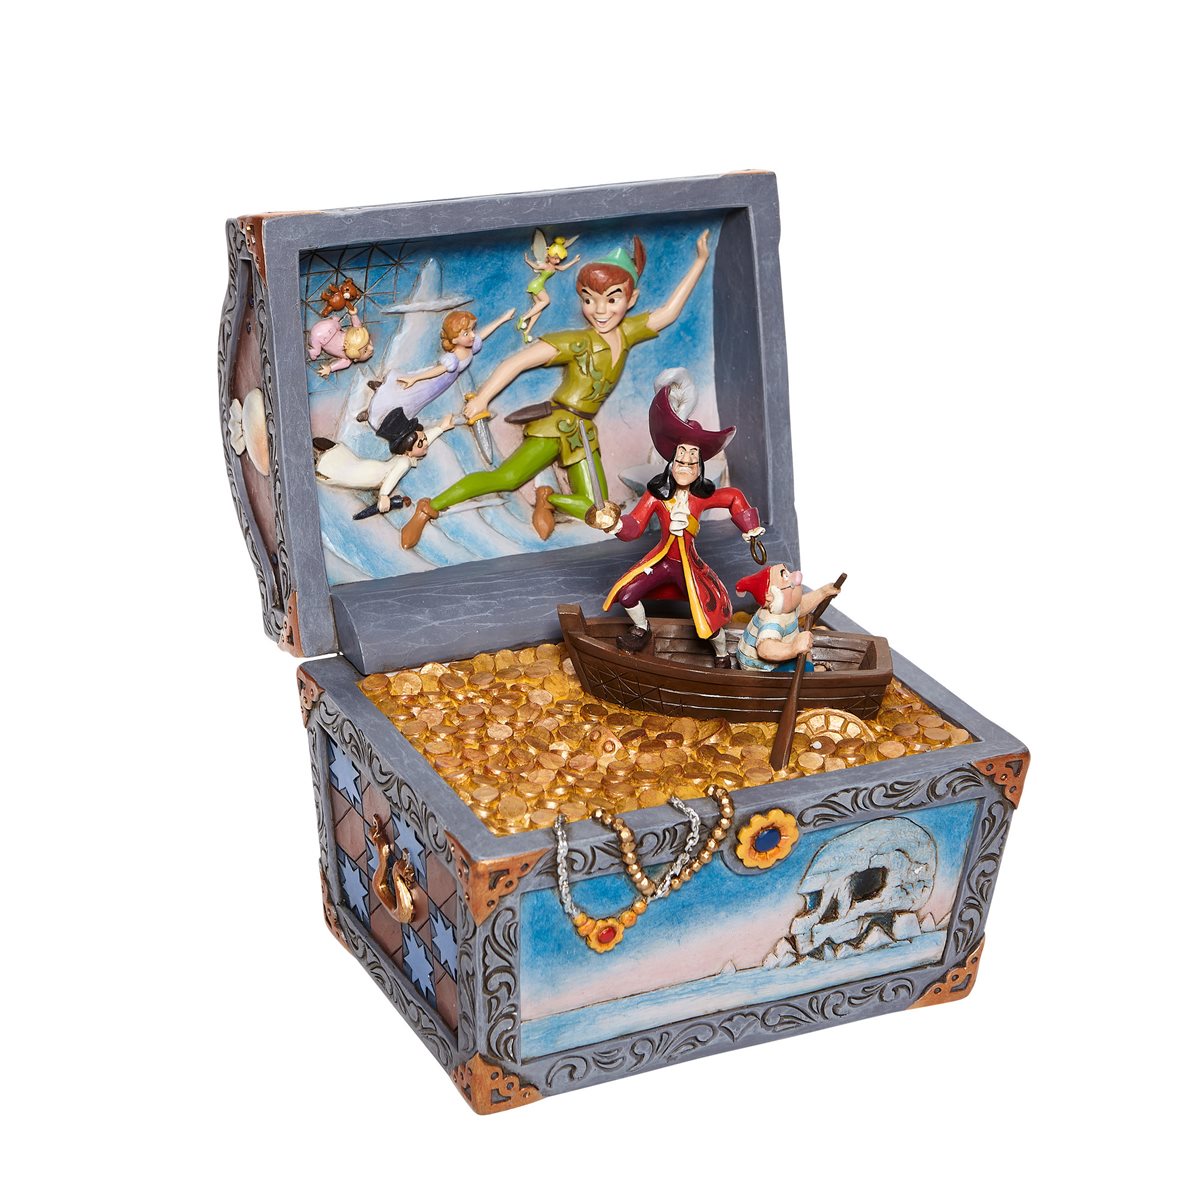 Peter Pan Treasure Chest Figurine